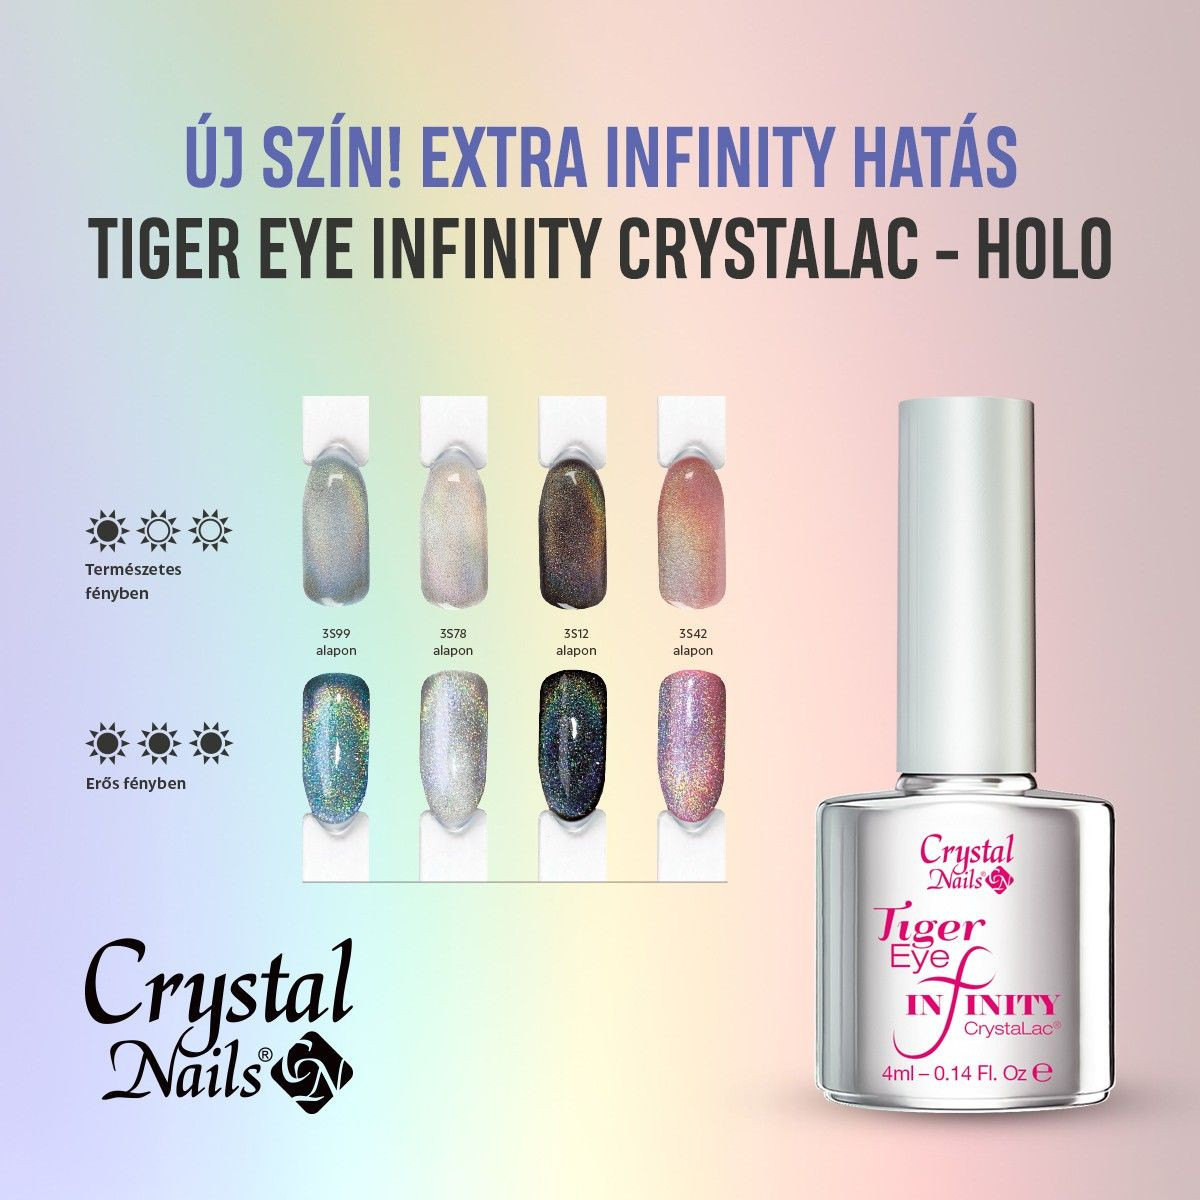 Új! Tiger Eye Infinity CrystaLac #HOLO